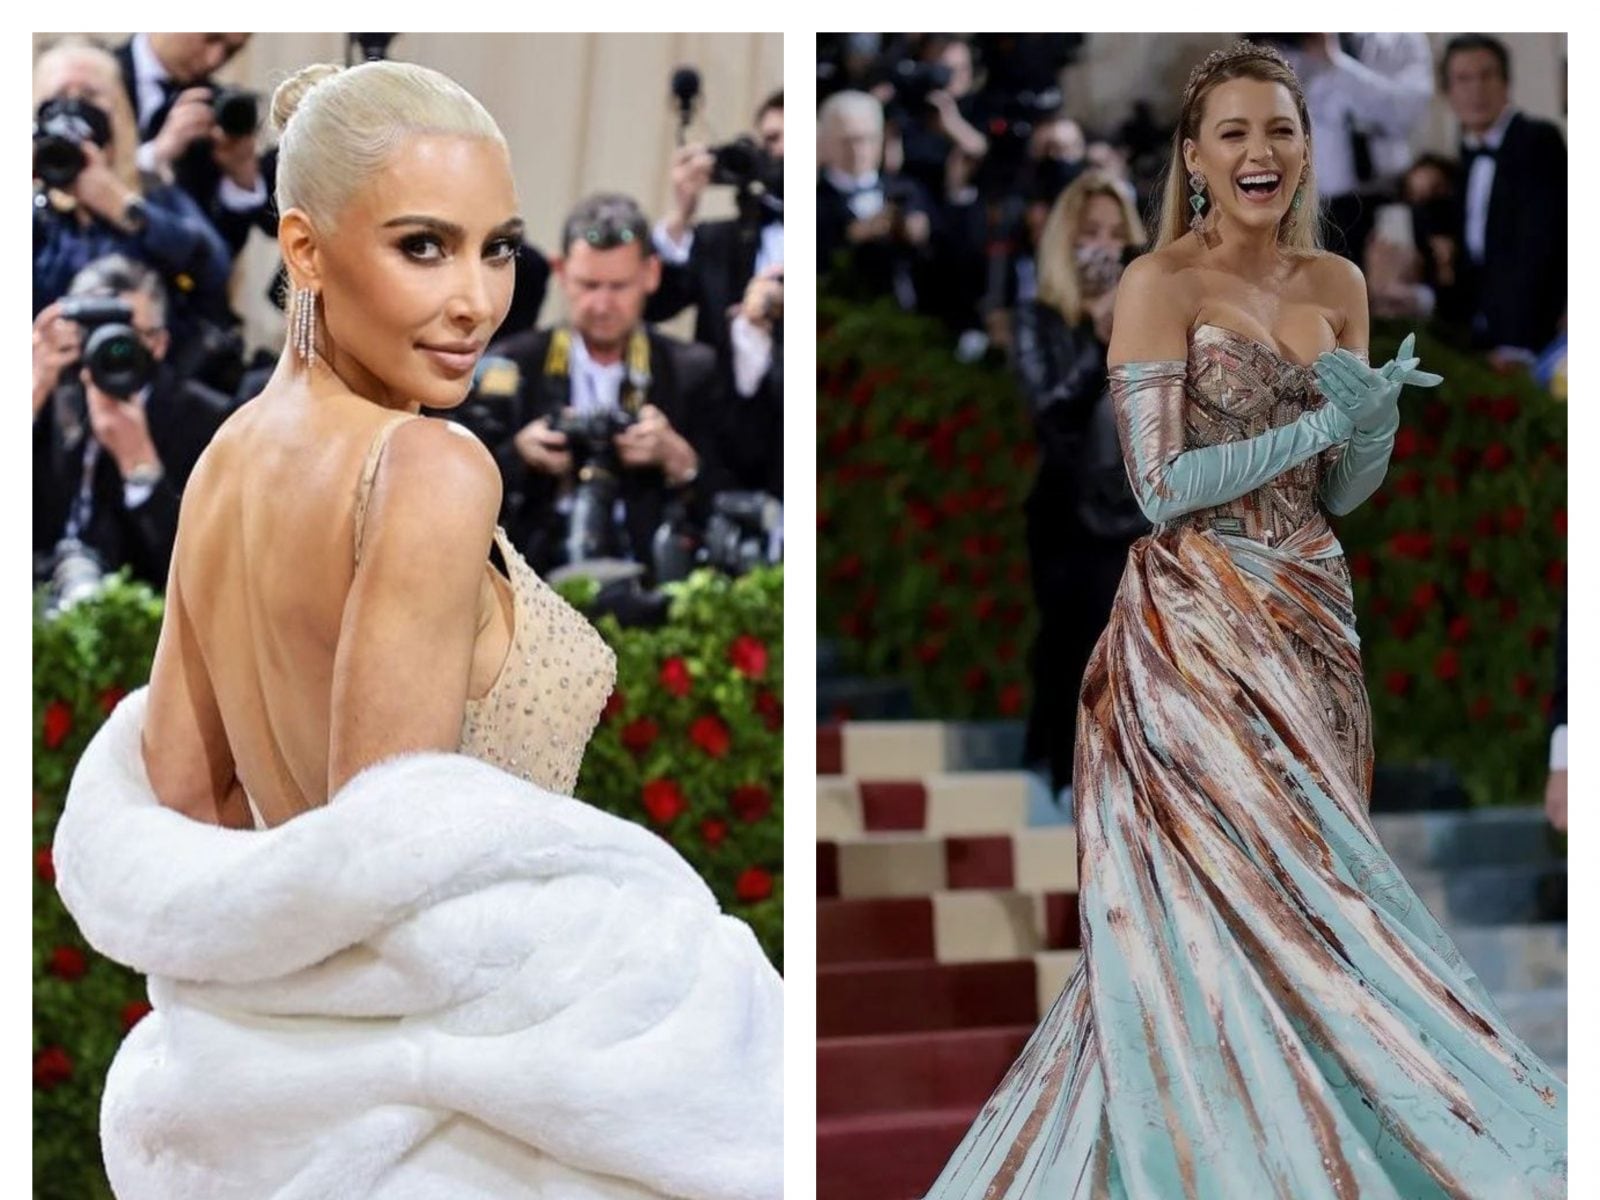 Met Gala 2022 best dressed: Kim Kardashian, Blake Lively top the list